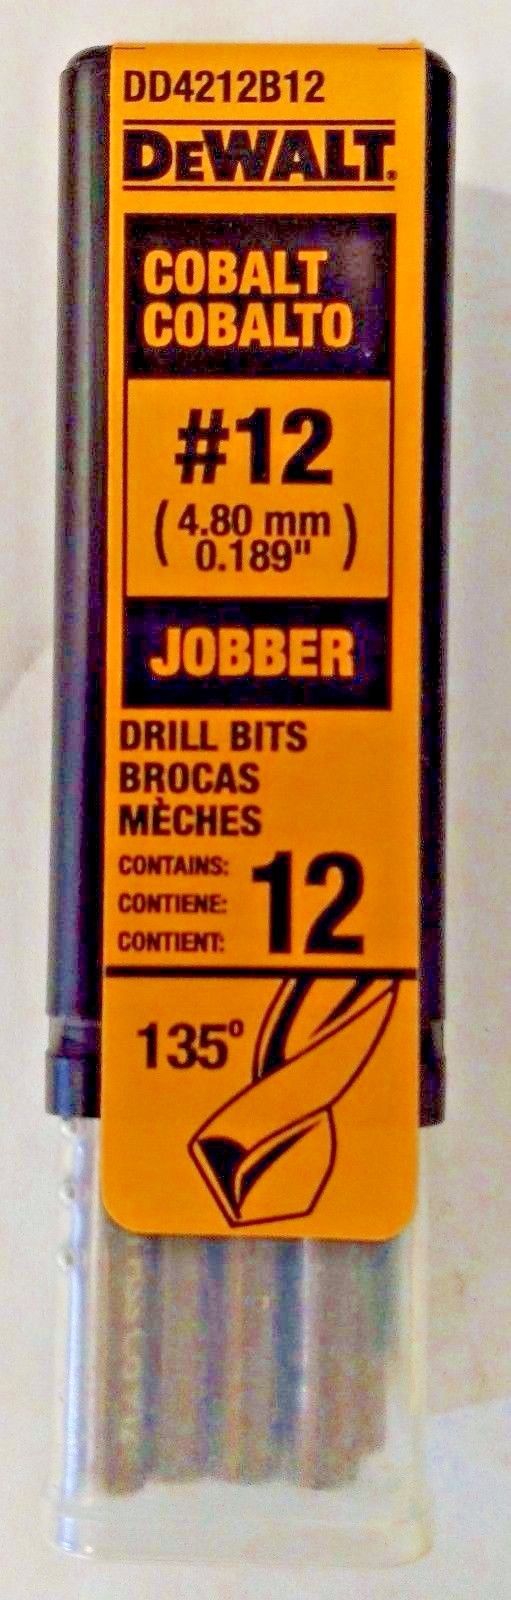 Dewalt DD4212B12 #12 Wire Cobalt Jobber Length Drill Bits 12 Pack Germany